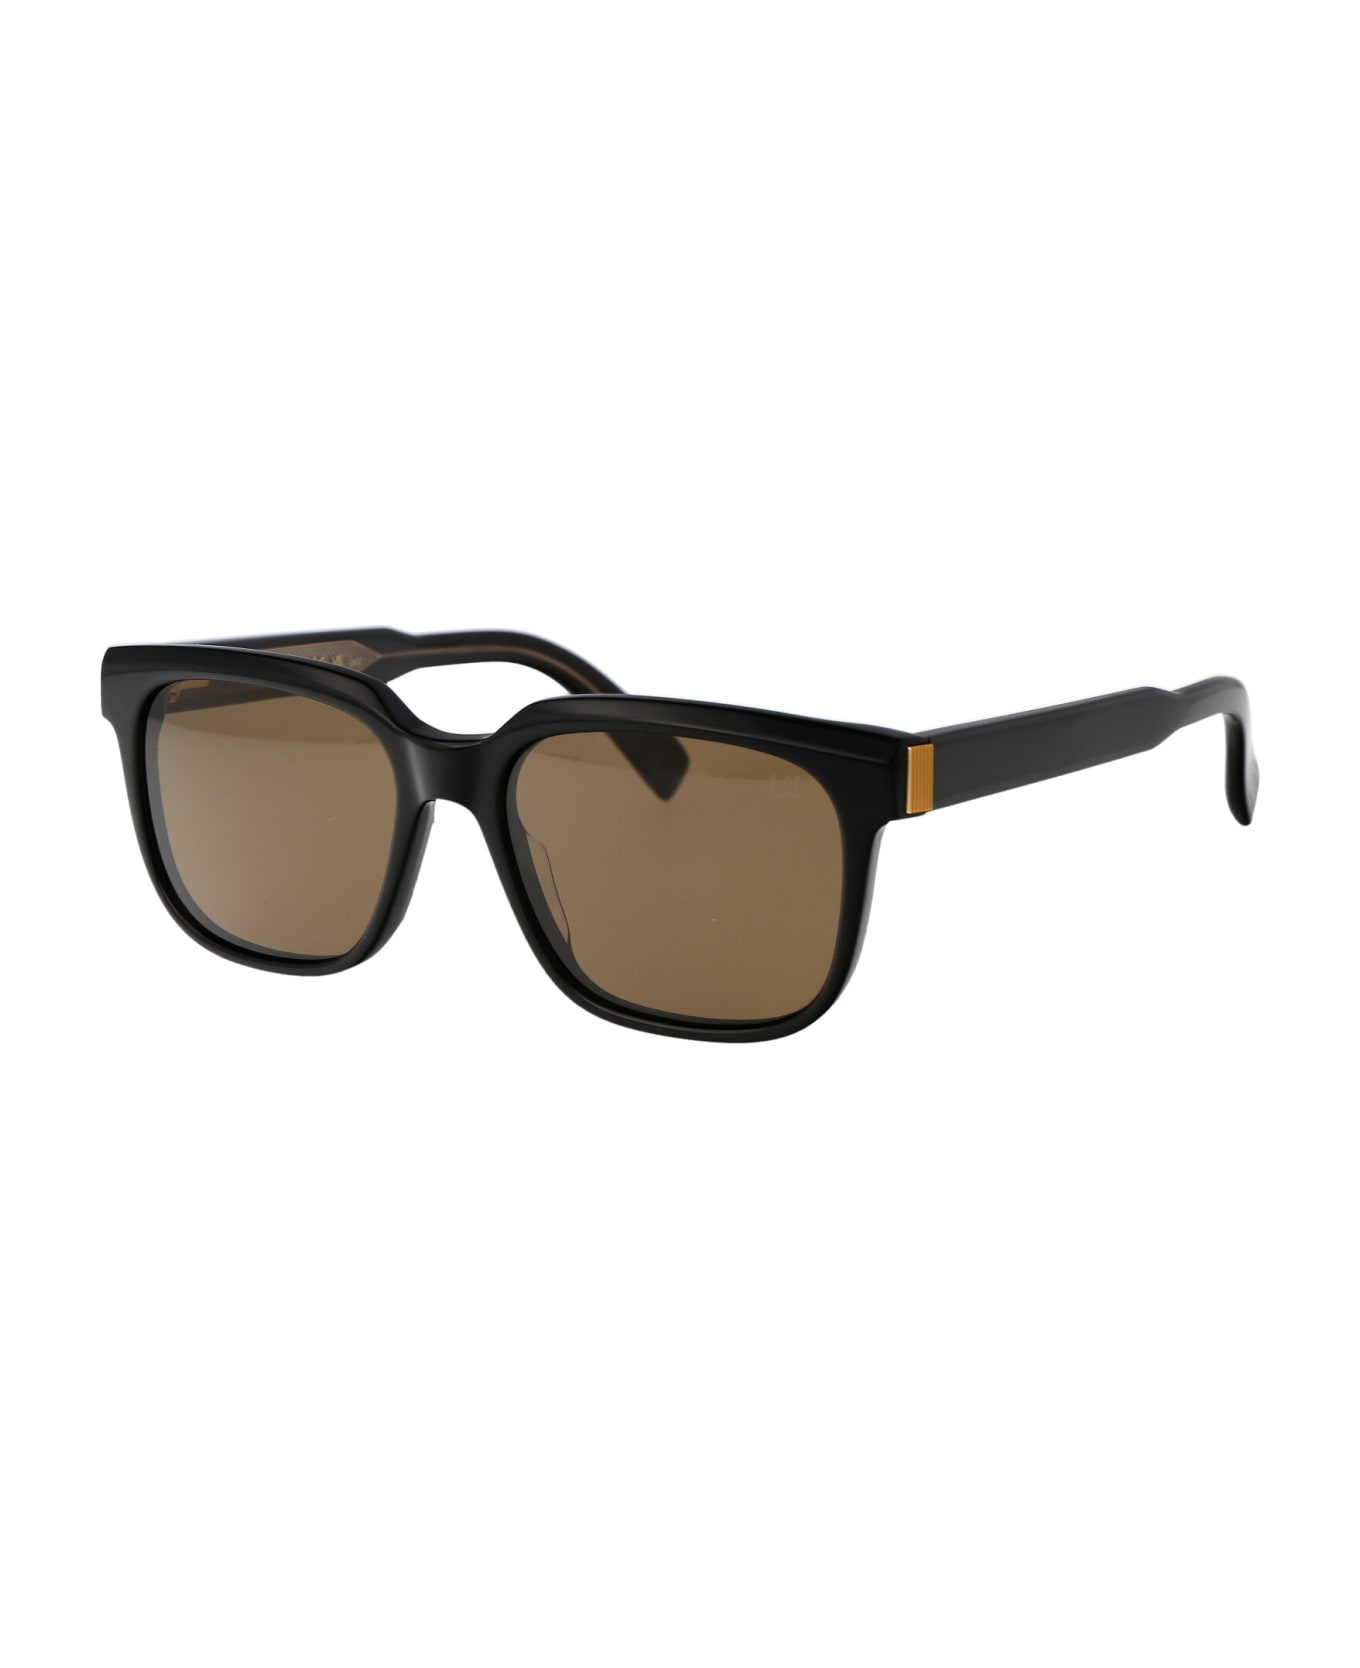 Dunhill Du0002s Sunglasses - 001 BLACK BLACK BROWN サングラス